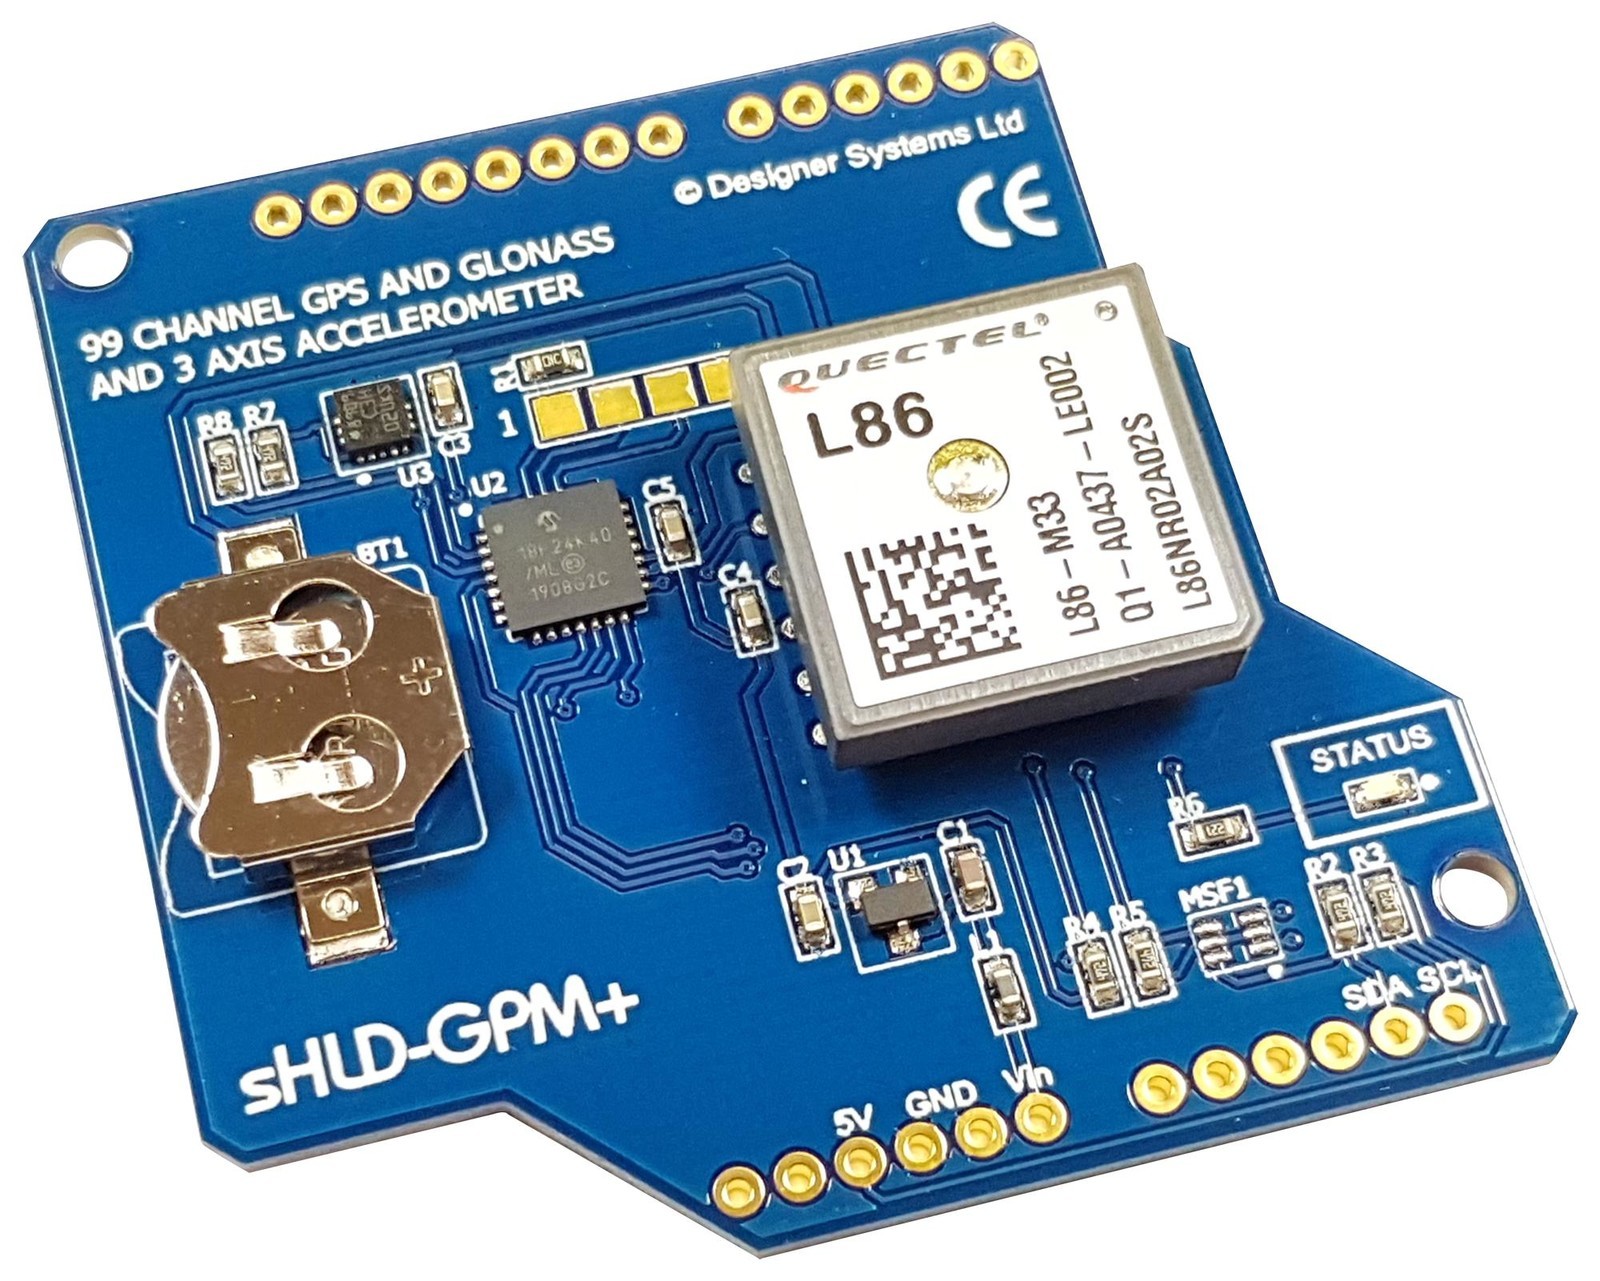 Designer Systems Shld-Gpm+ Gpm/gnss Shield, Arduino & Raspberry Pi?